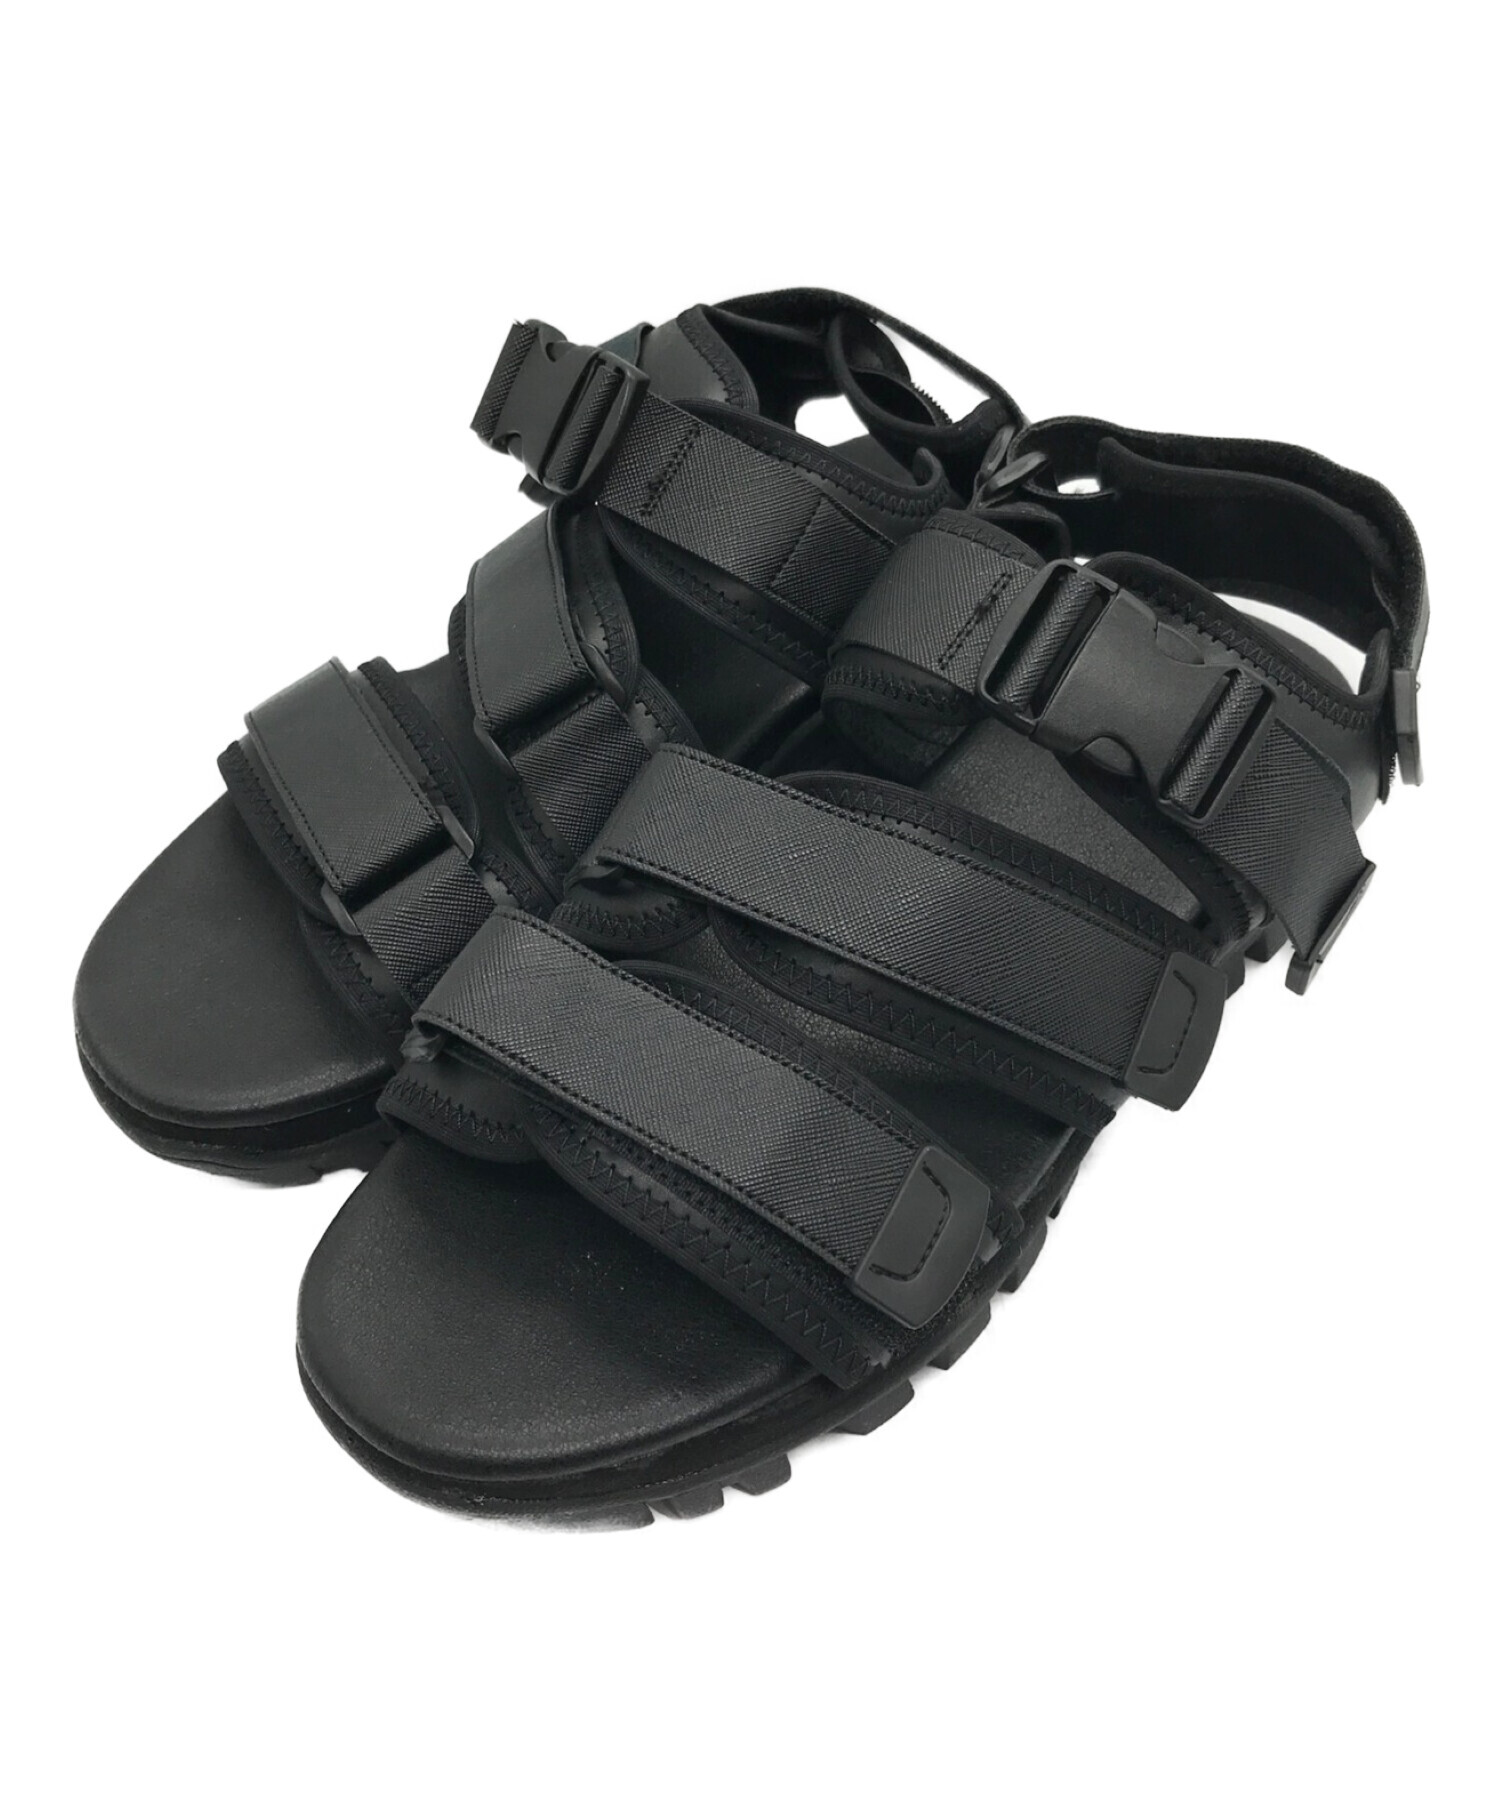 【KUUUPY】Synthetic Leather Sneaker Sandal